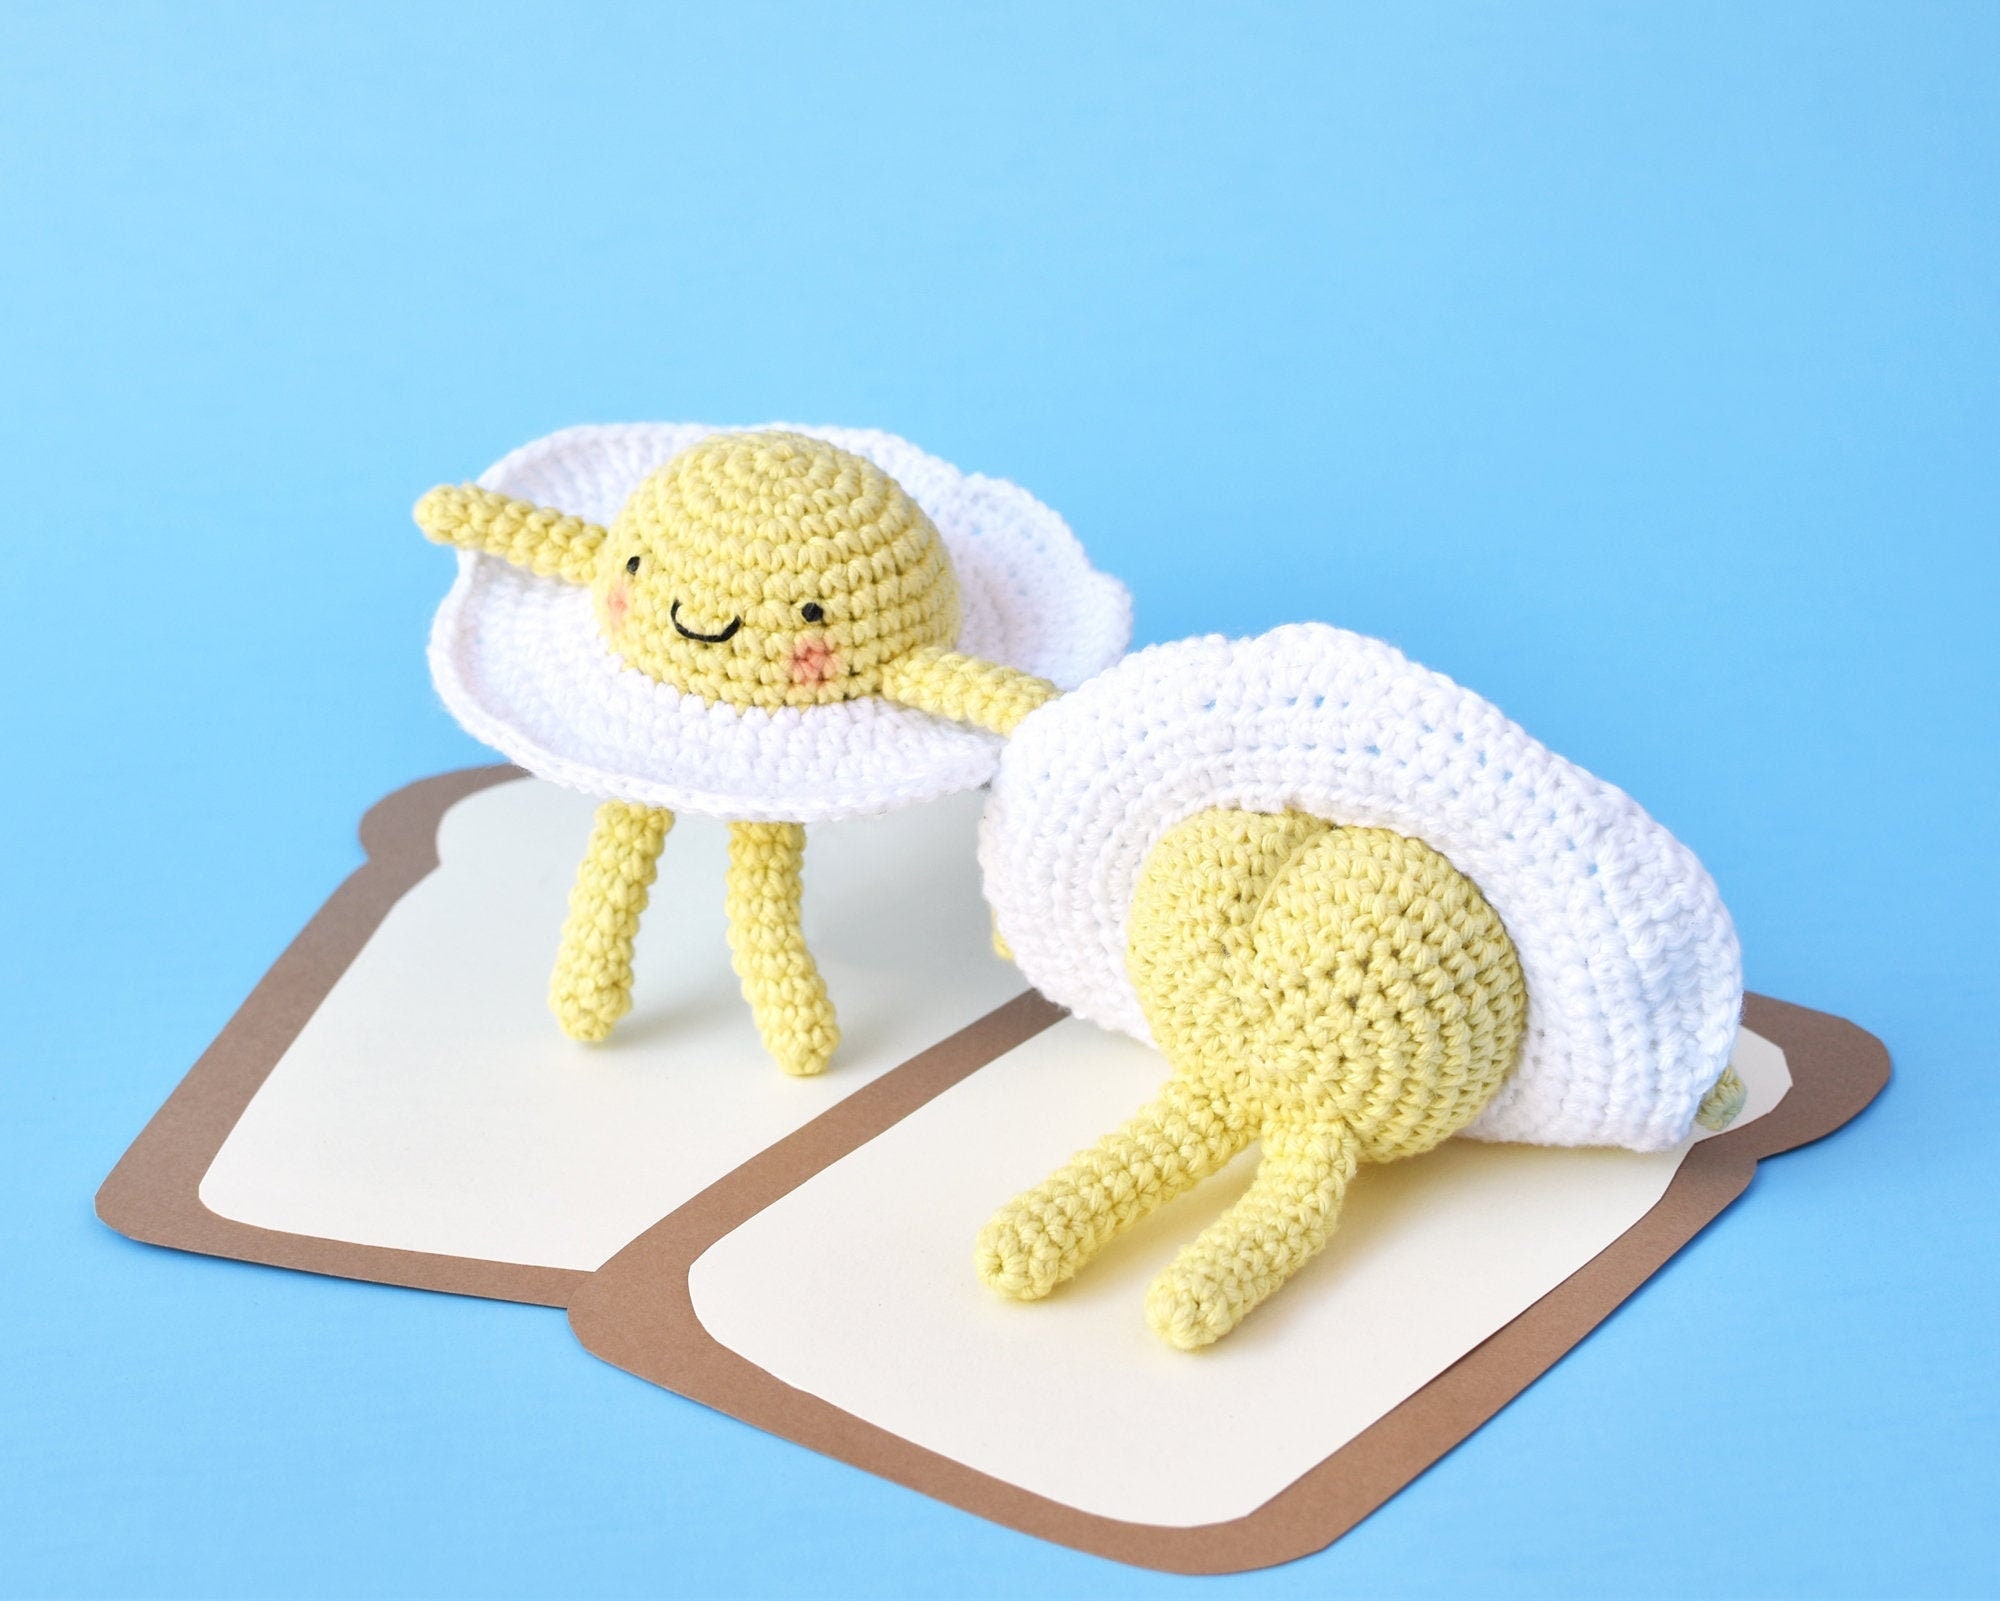 Cutest Crochet Creations  Amigurumi Pattern Book Review - Tiny Curl Crochet